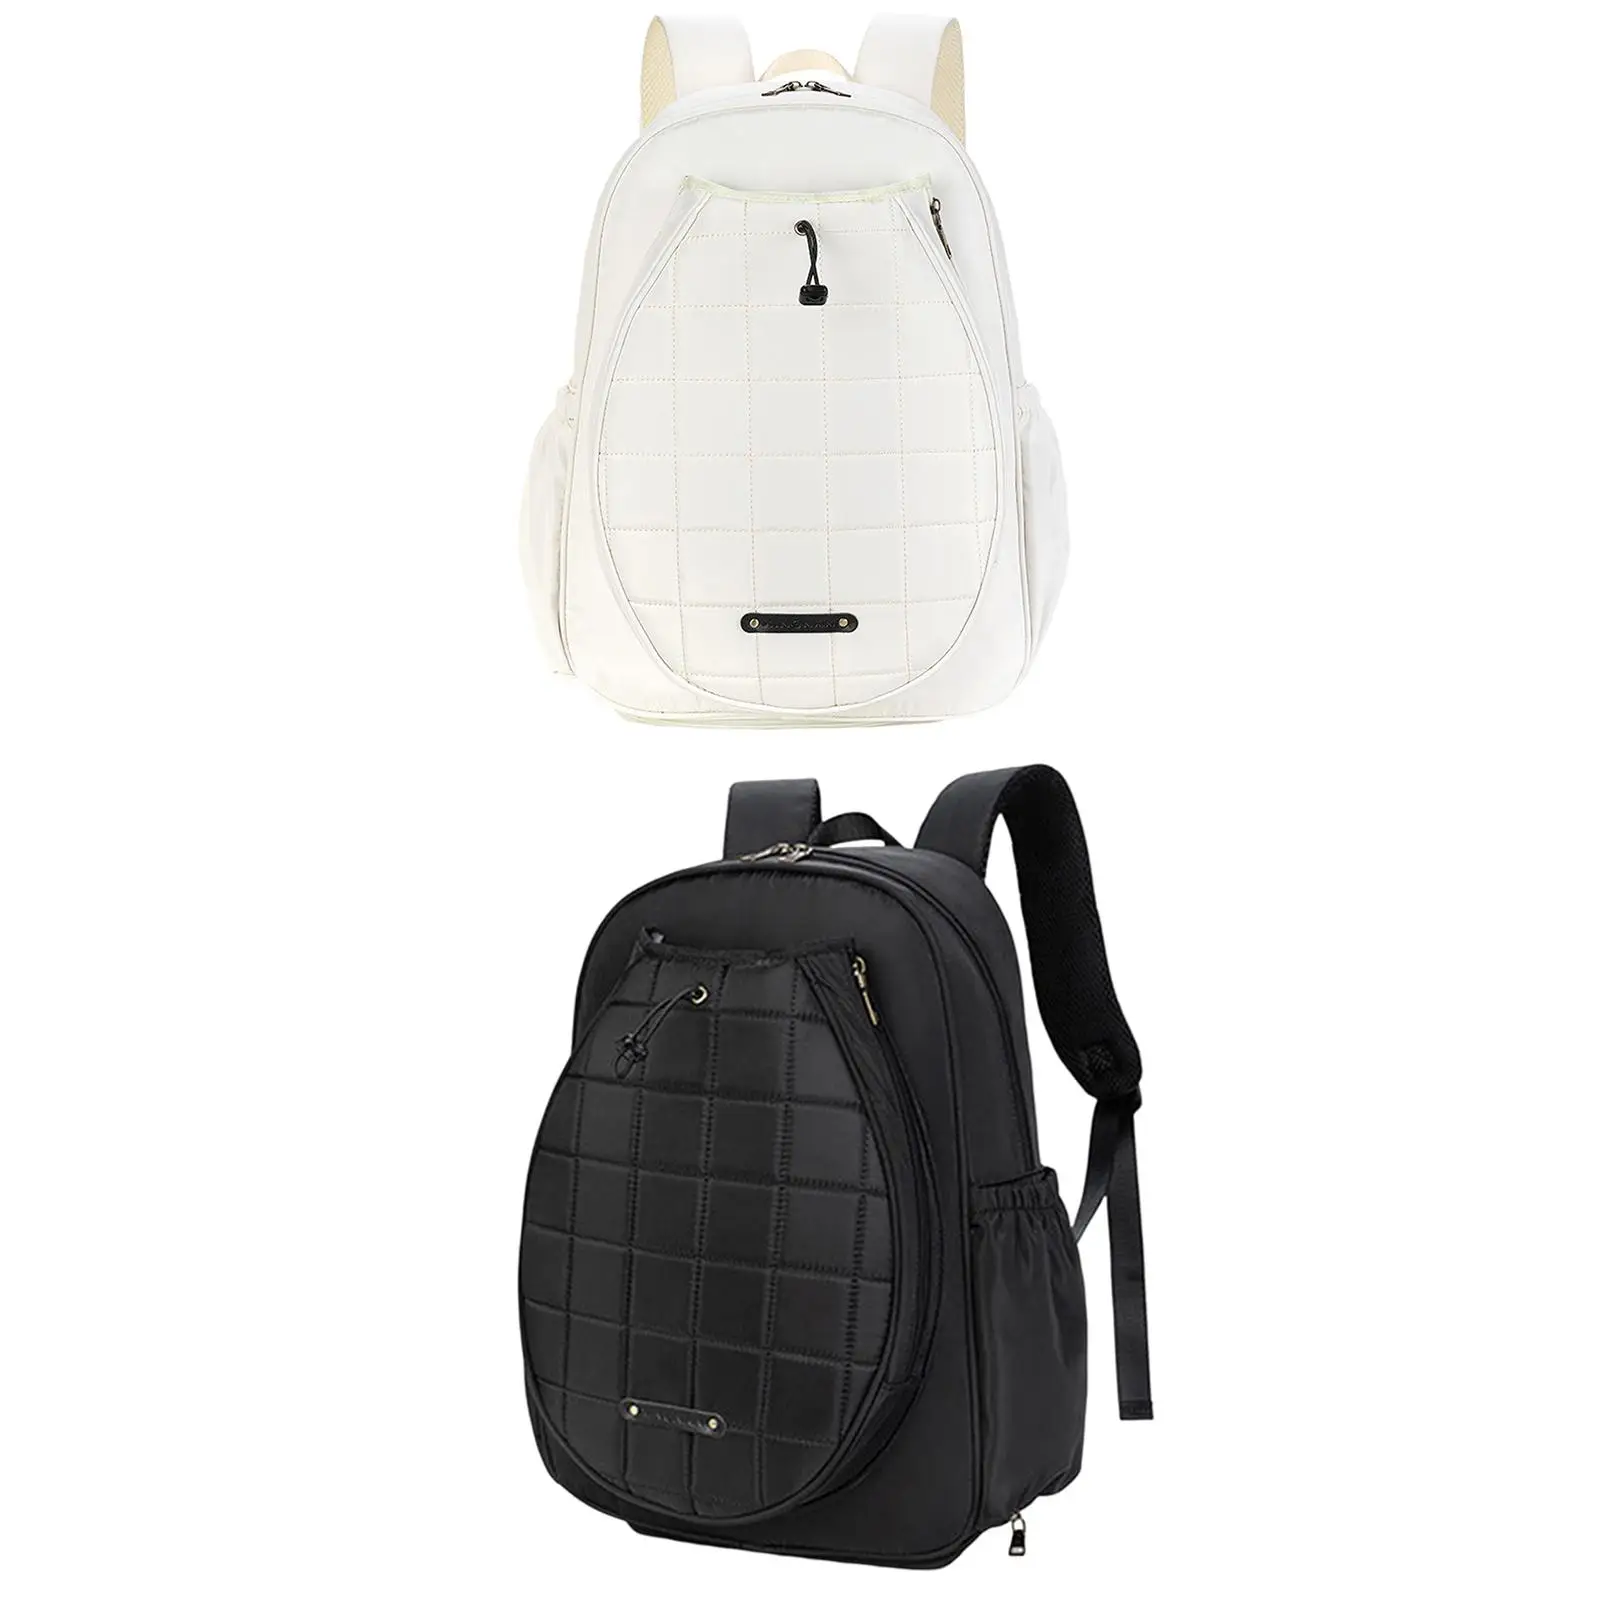 Tennis Backpack Tennis Bag Multifunctional Sport Bag Tennis Racket Bag Racket Holder for Pickleball Paddles Badminton Racquet